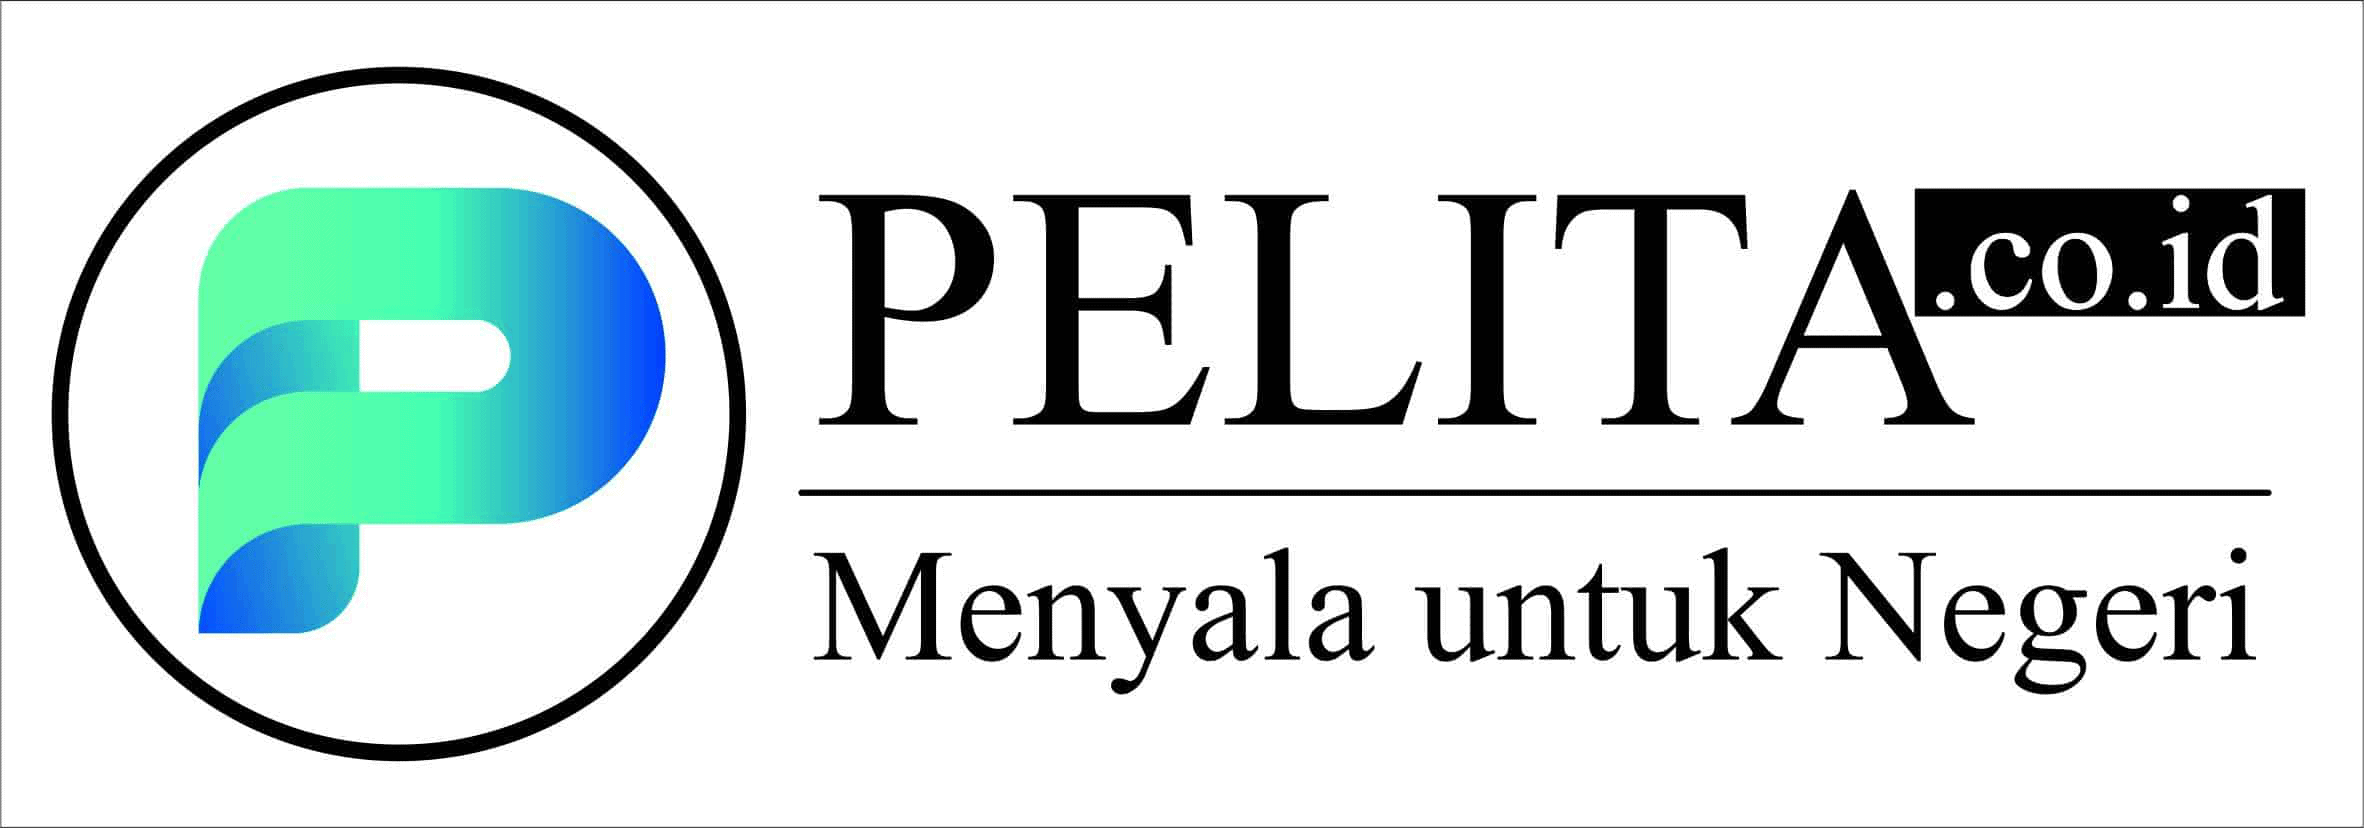 pelita.co.id